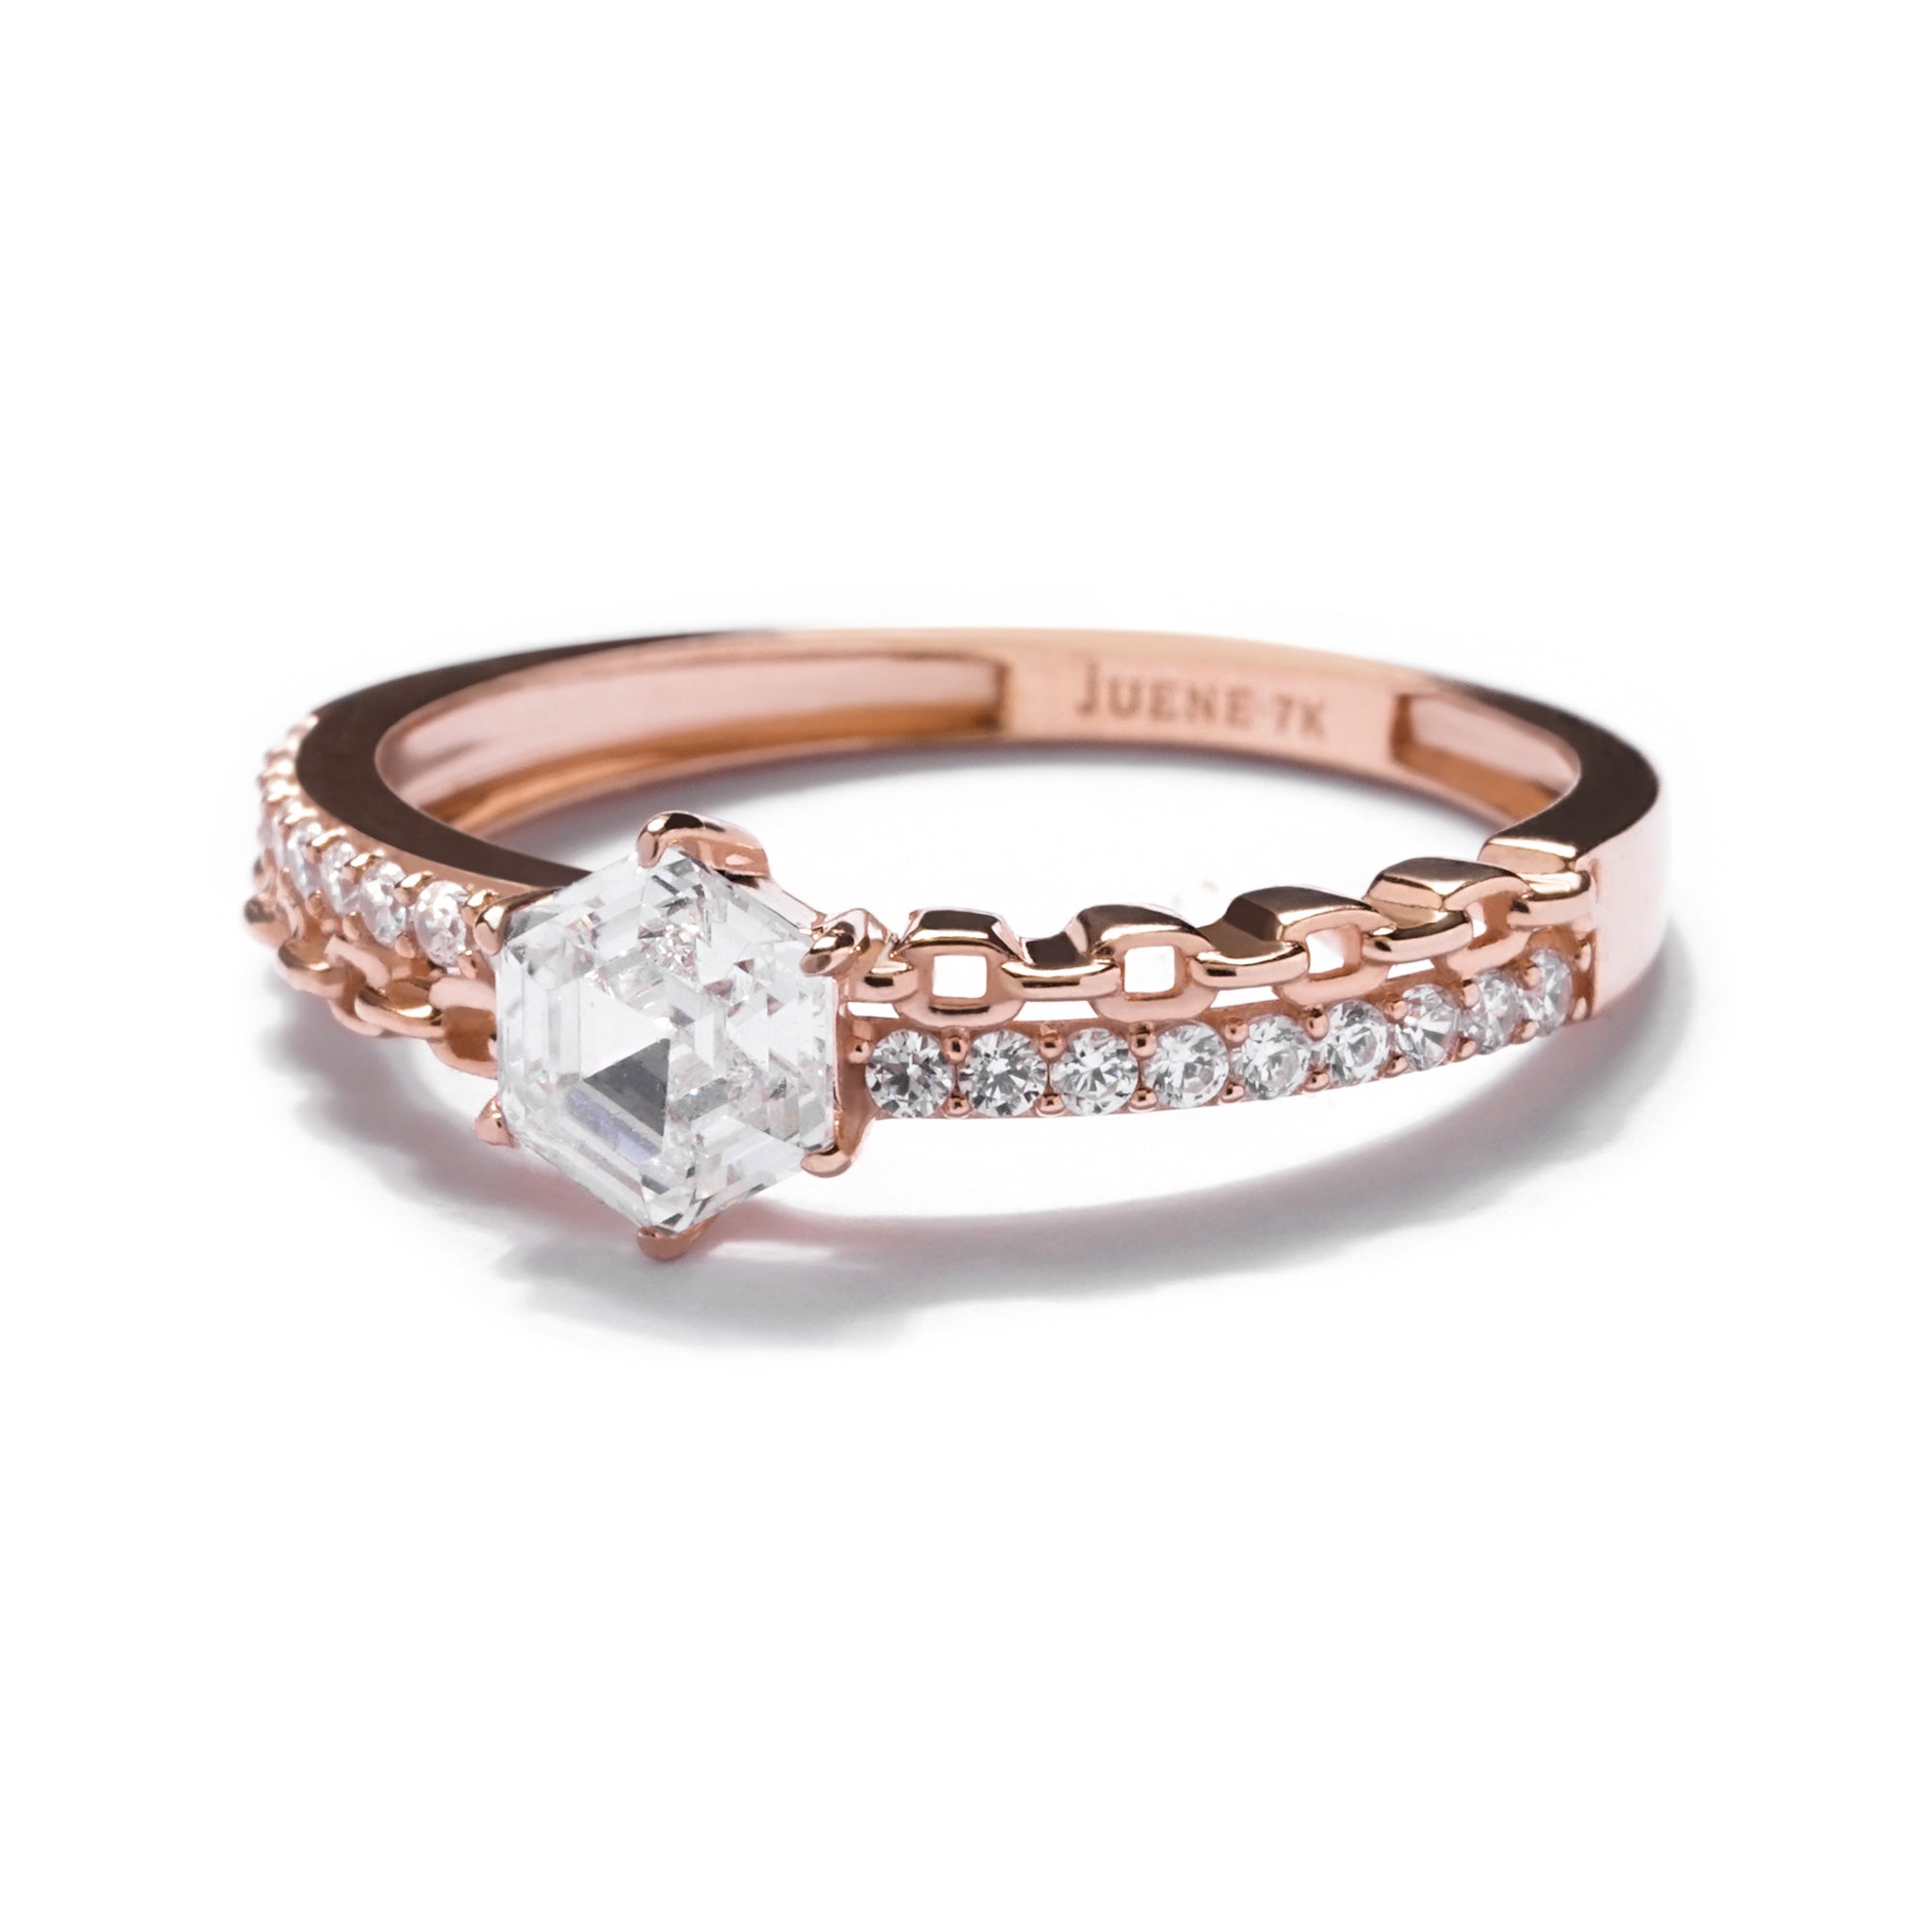 Anna Gold Ring - Sparkle & Joy - Juene Jewelry